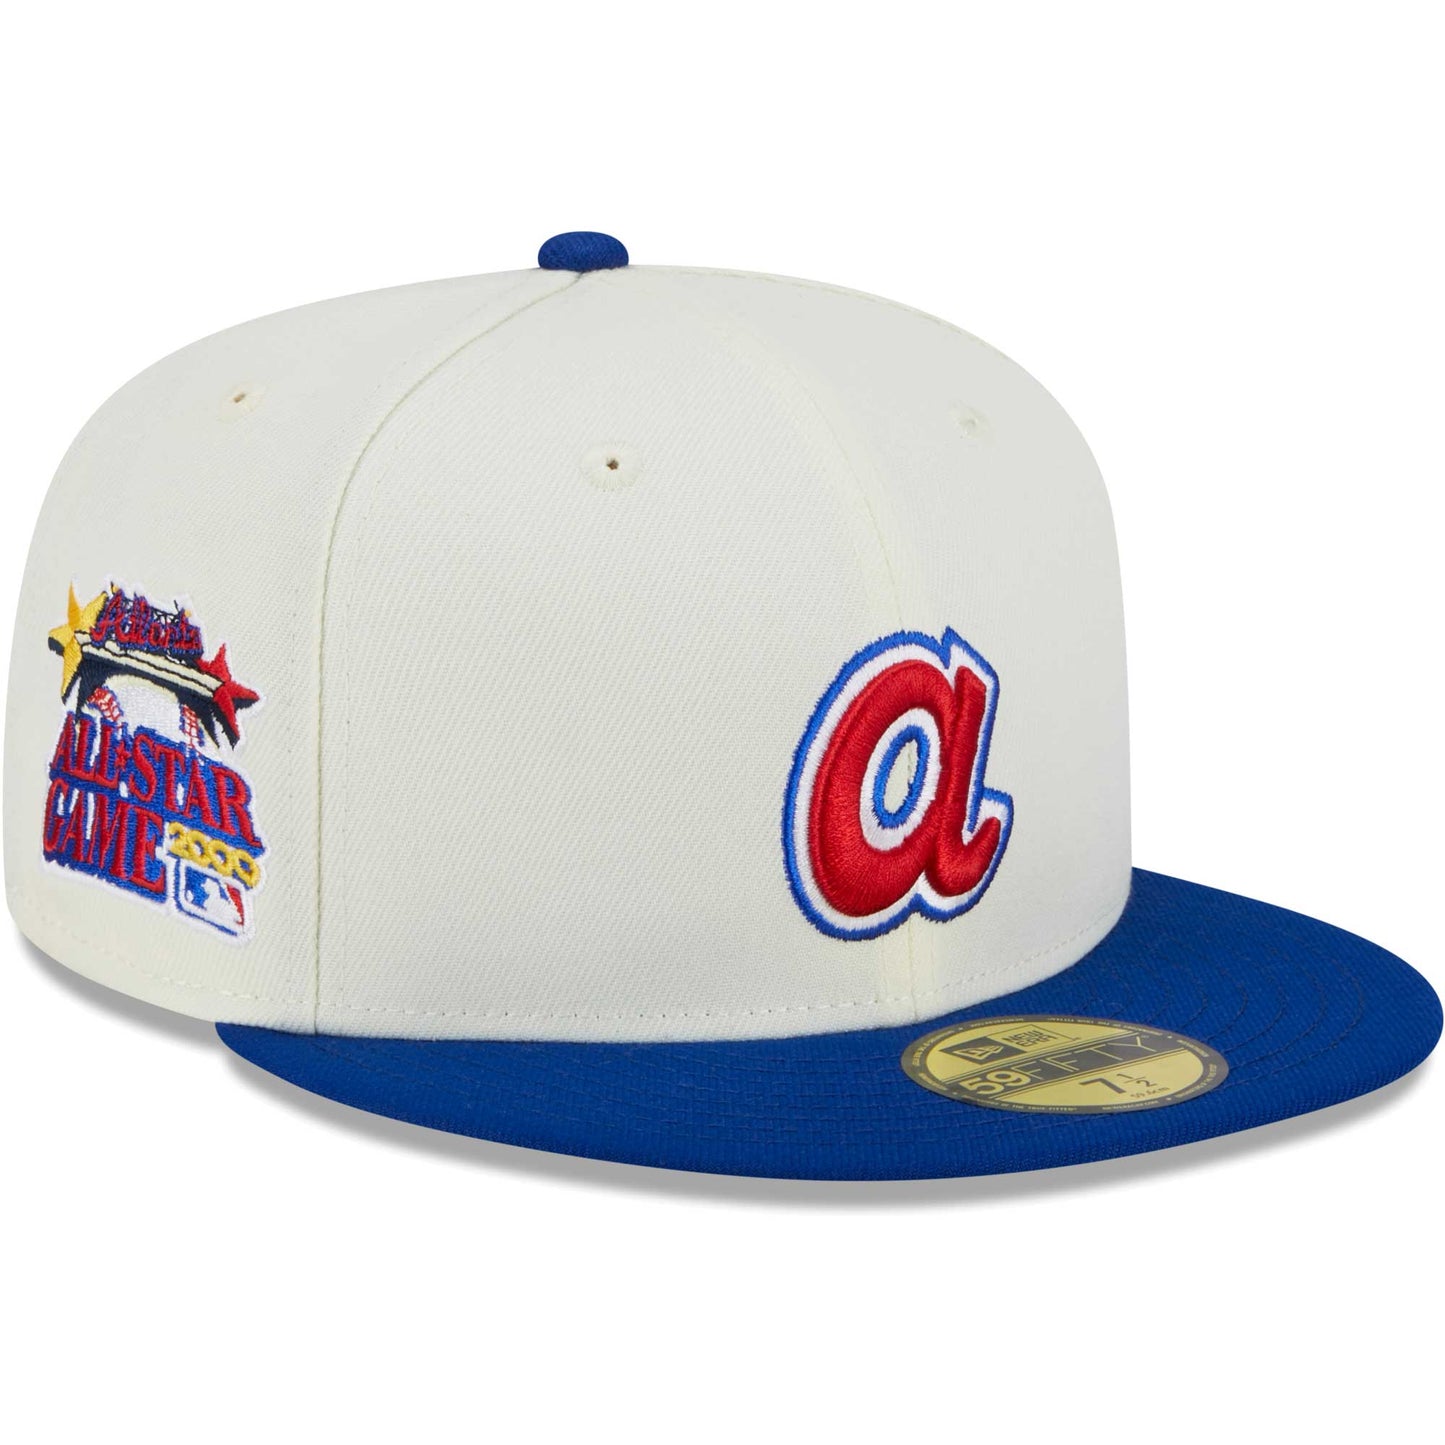 Atlanta Braves New Era Retro 59FIFTY Fitted Hat - Stone/Royal